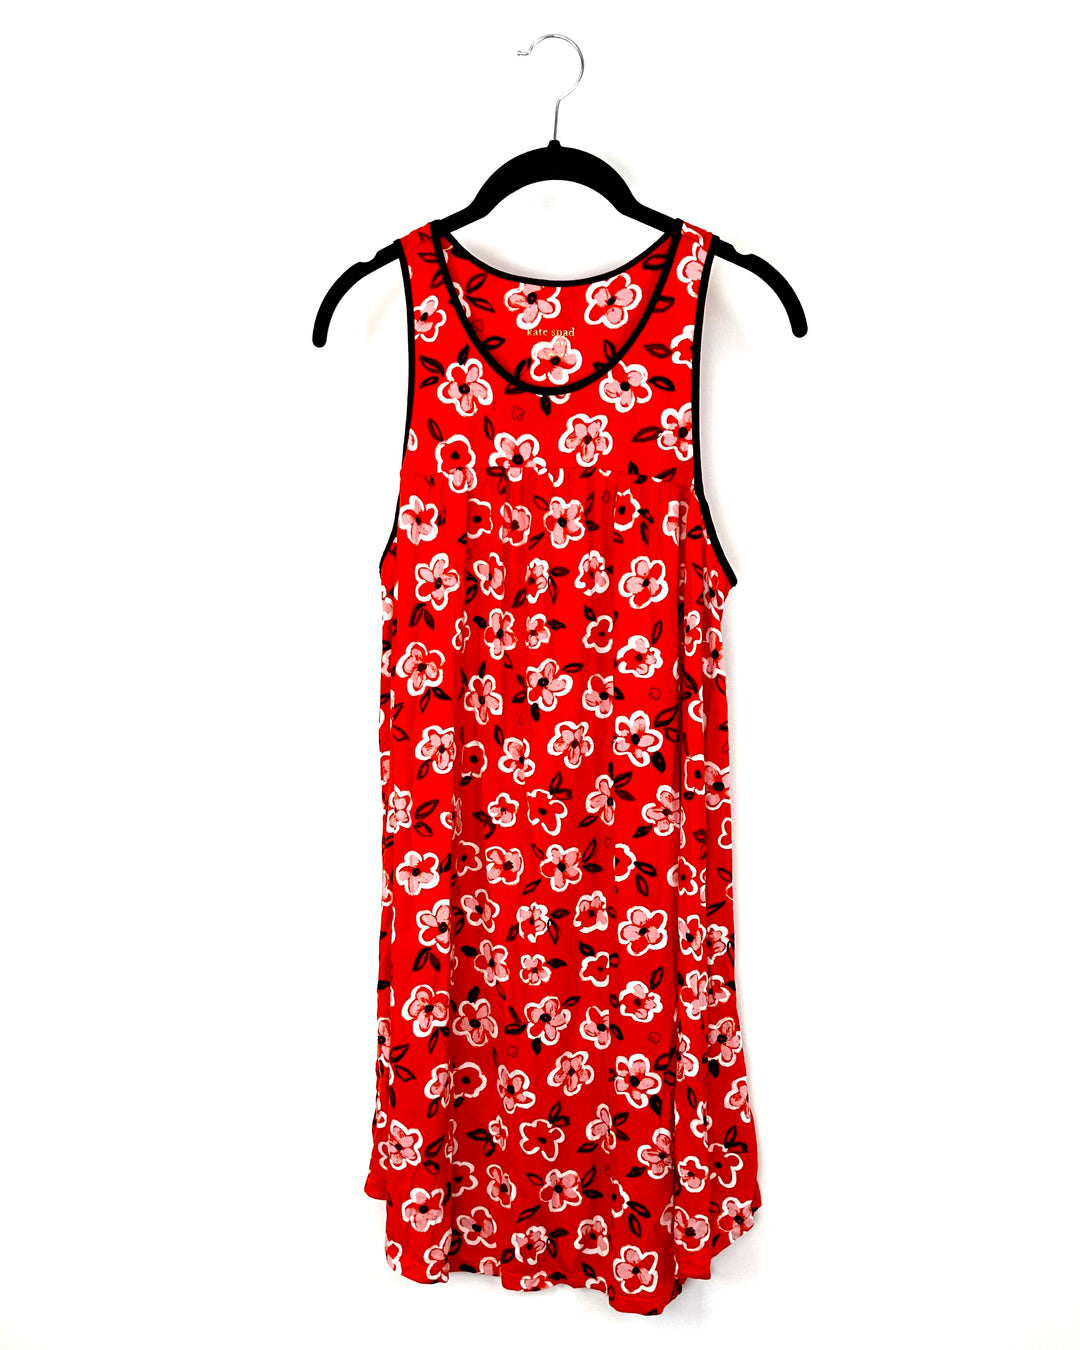 Orange Floral Print Nightgown - Size 4-6